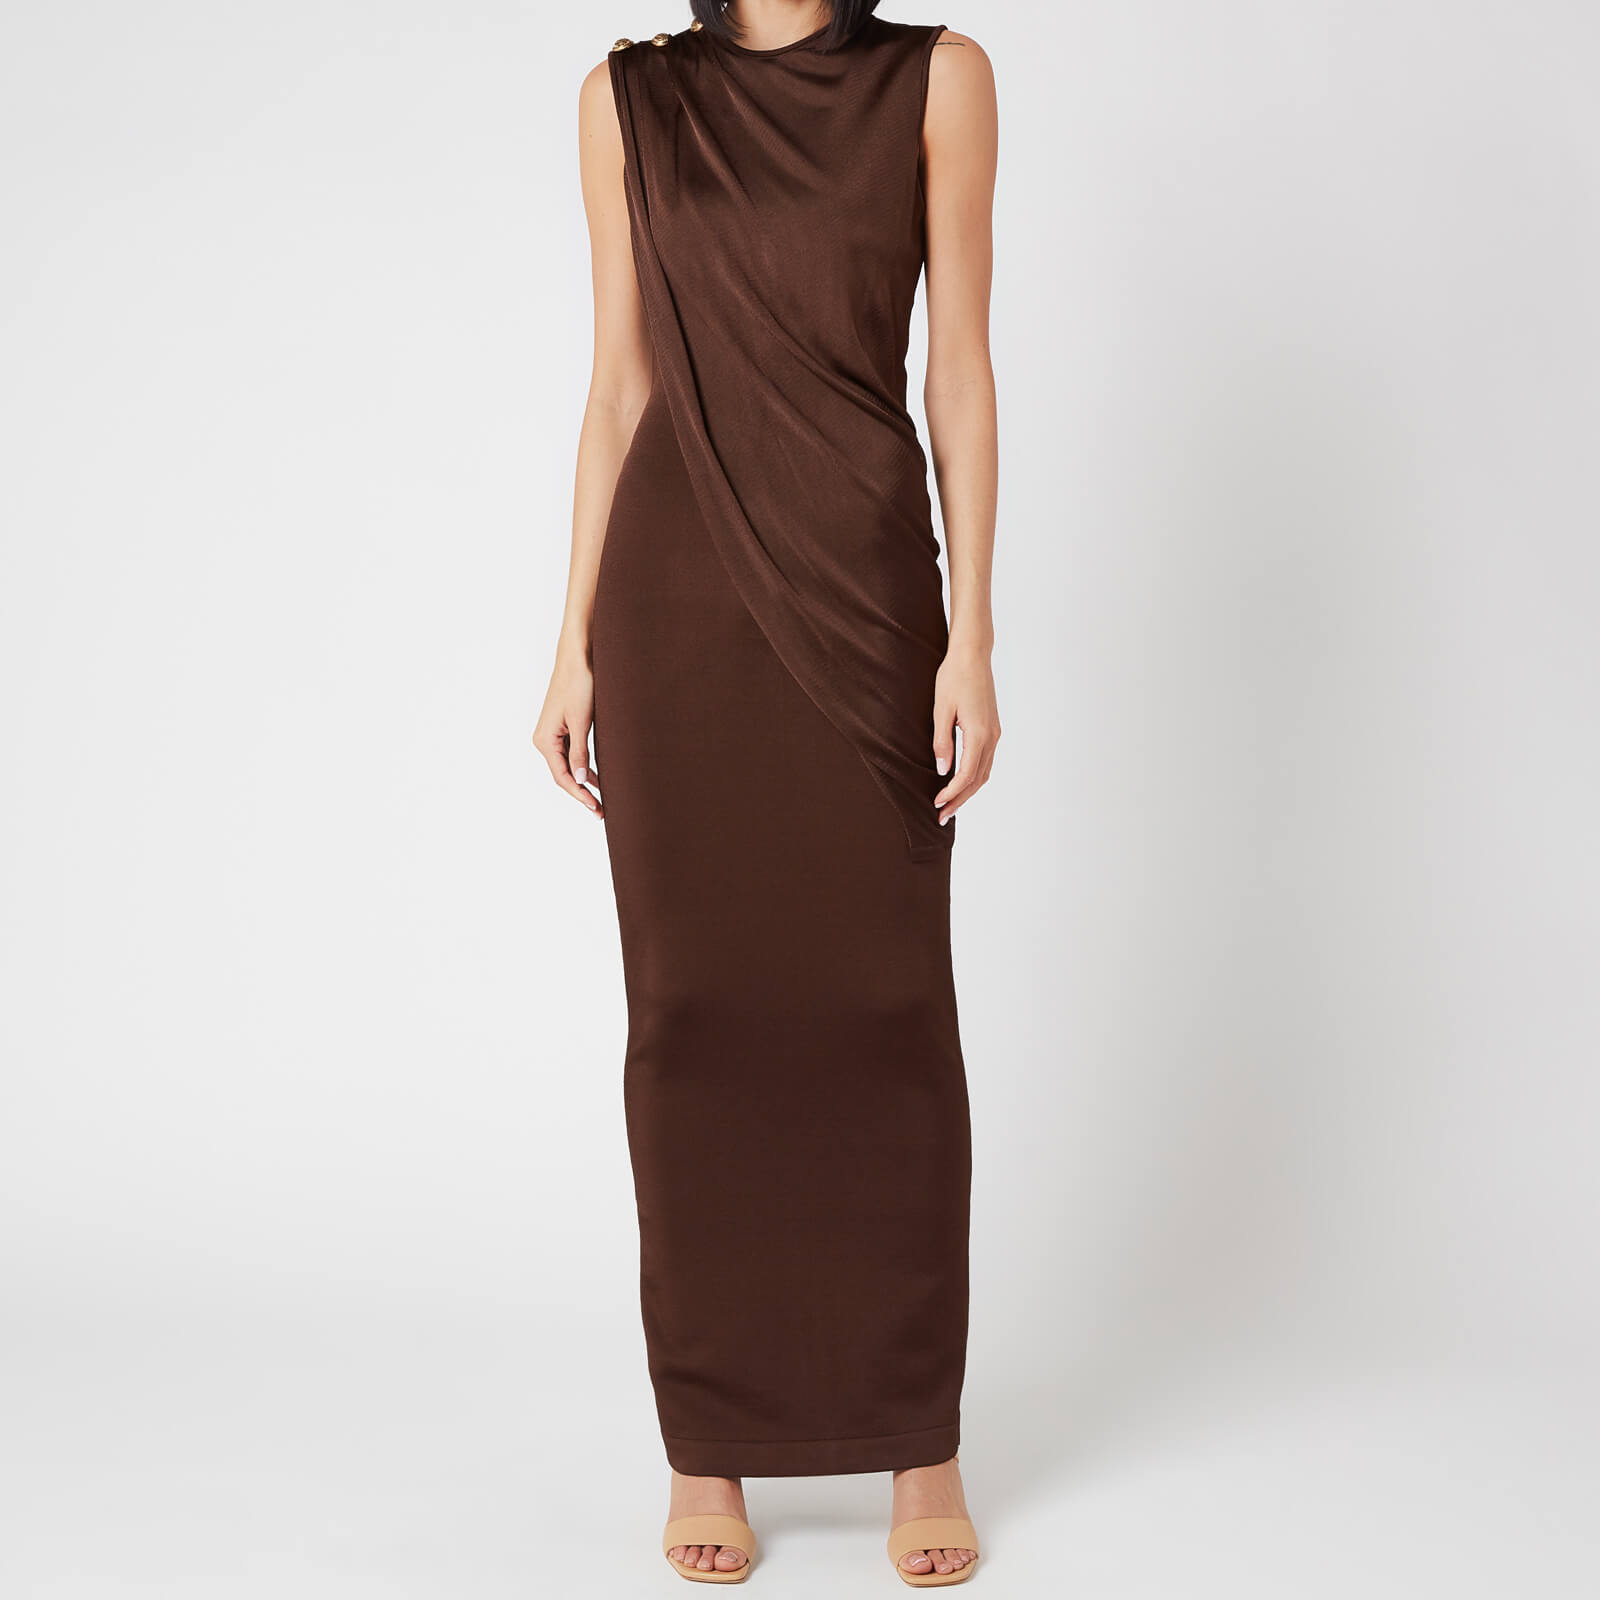 Balmain Women's Long Sleeveless Asymmetric Draped Dress - Dark Brown - FR 36/UK 8